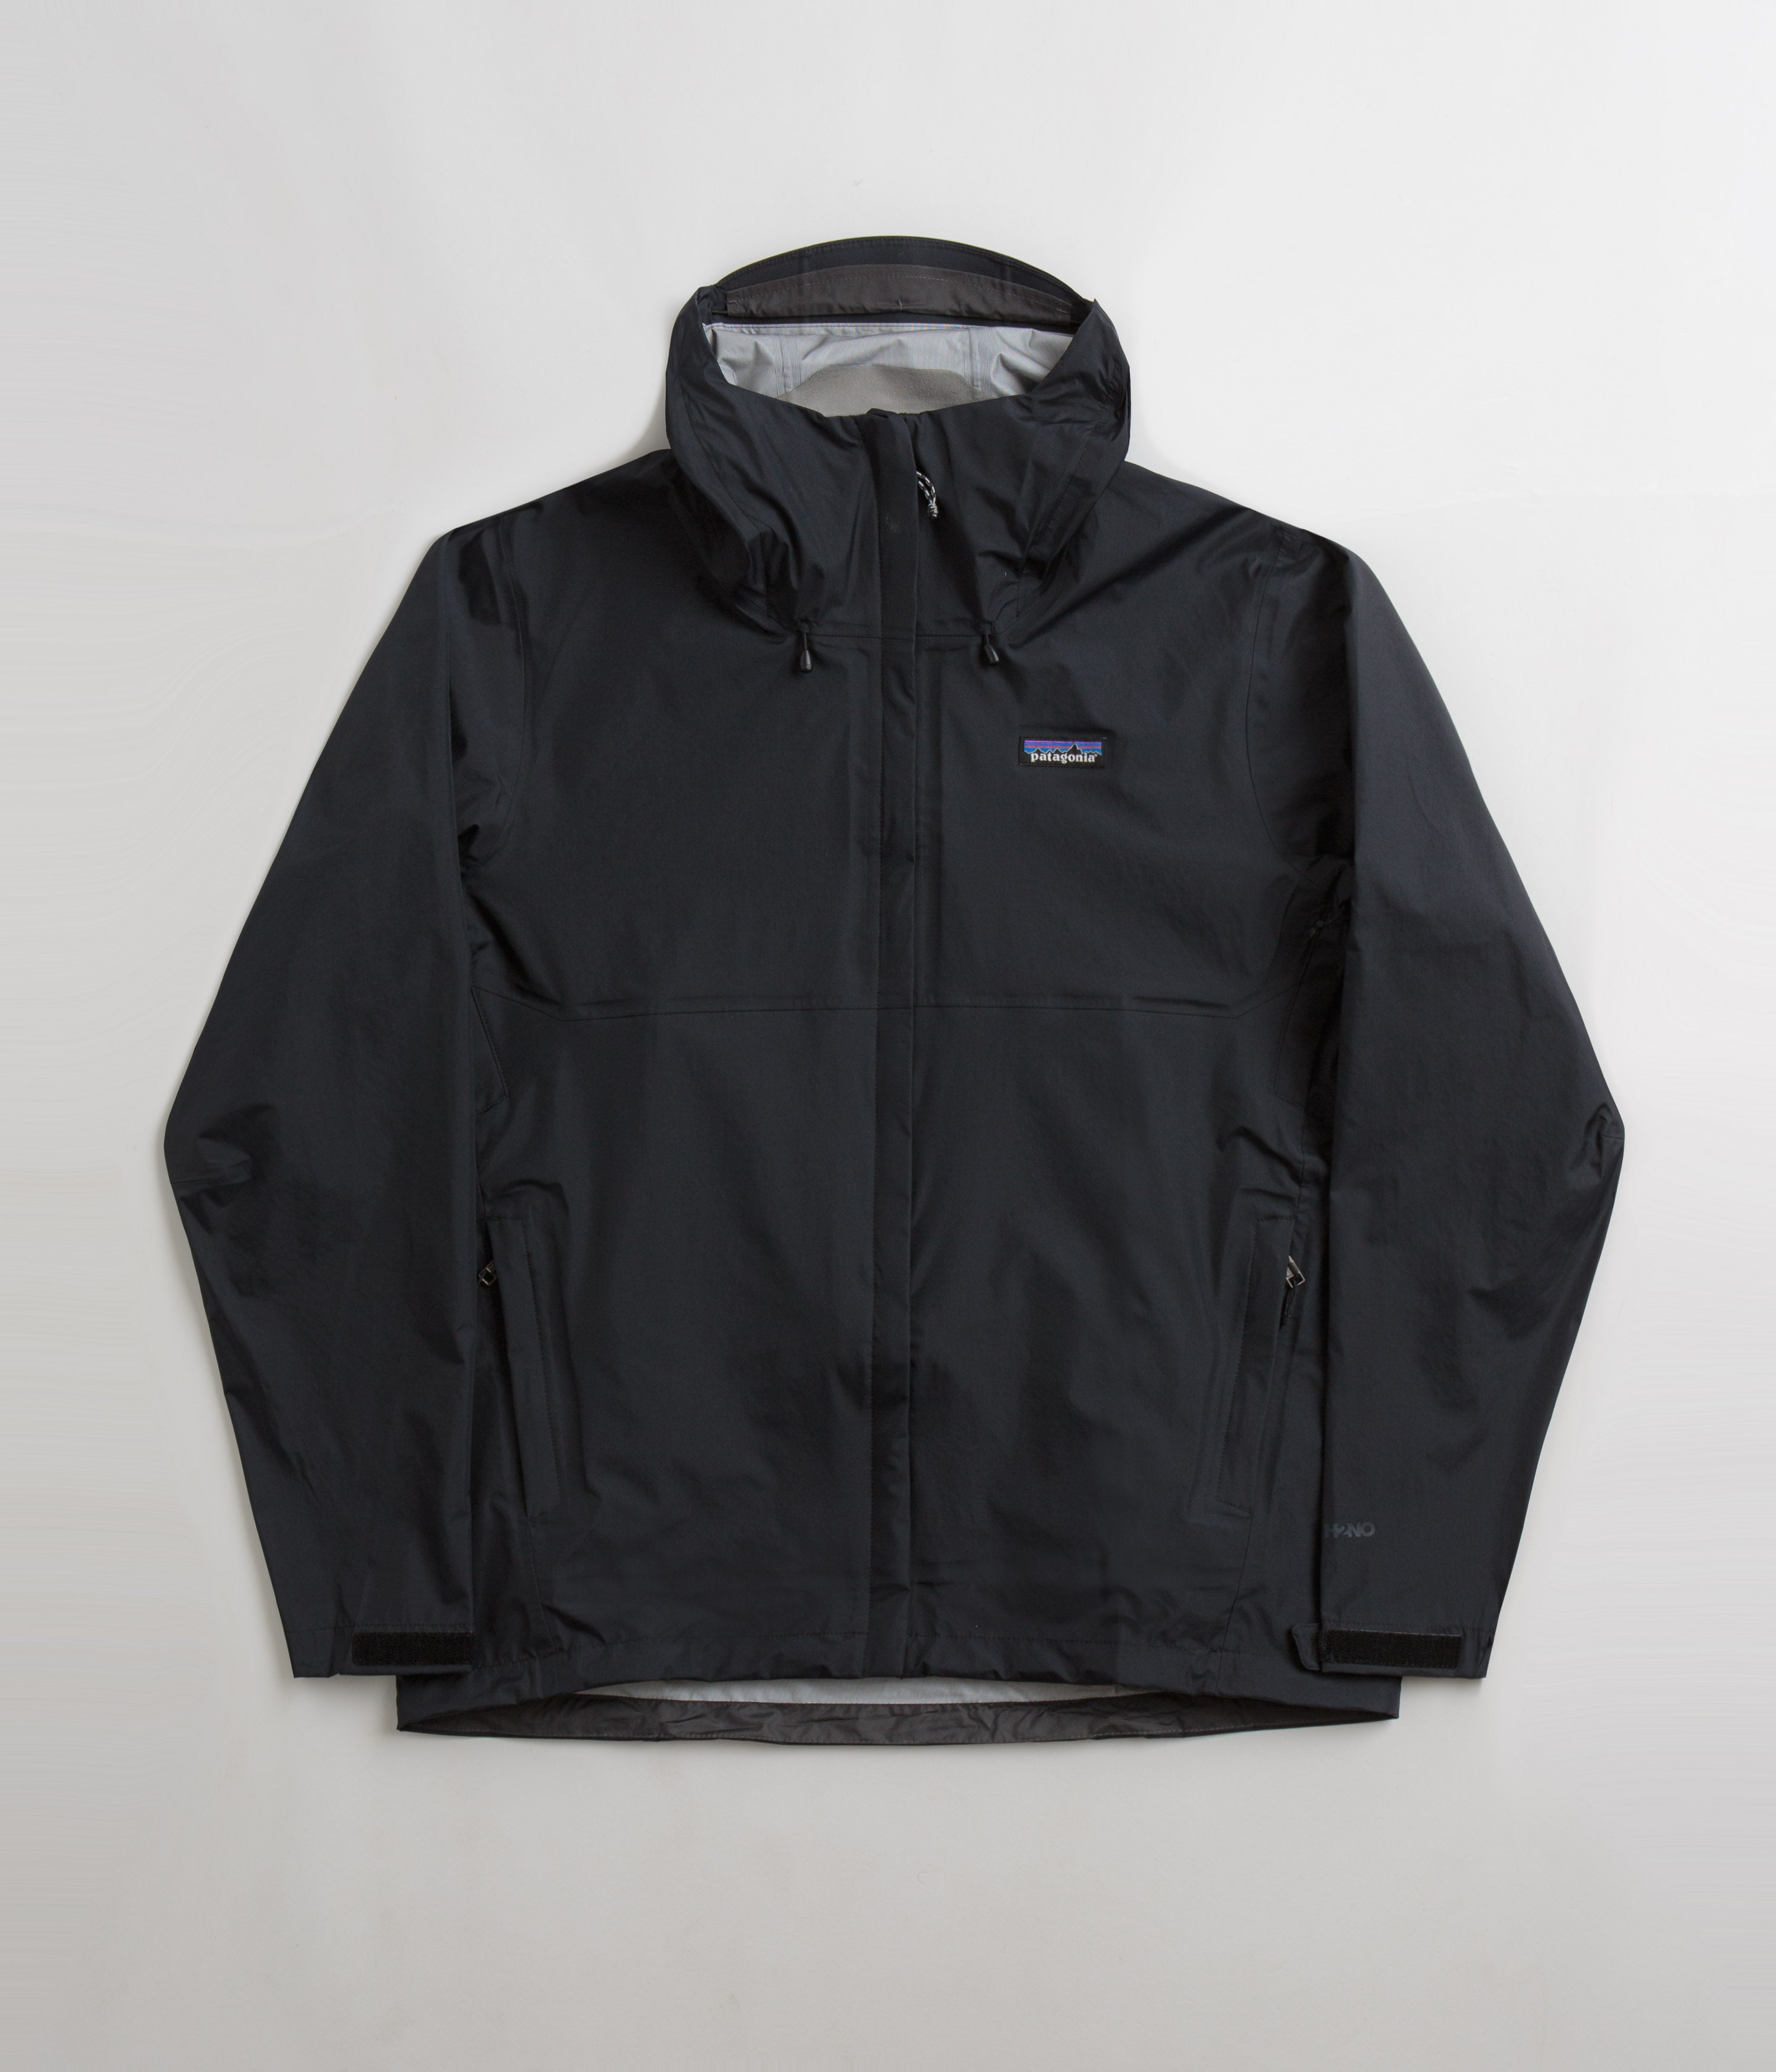 Patagonia Torrentshell 3L Jacket - Textile Green | Flatspot